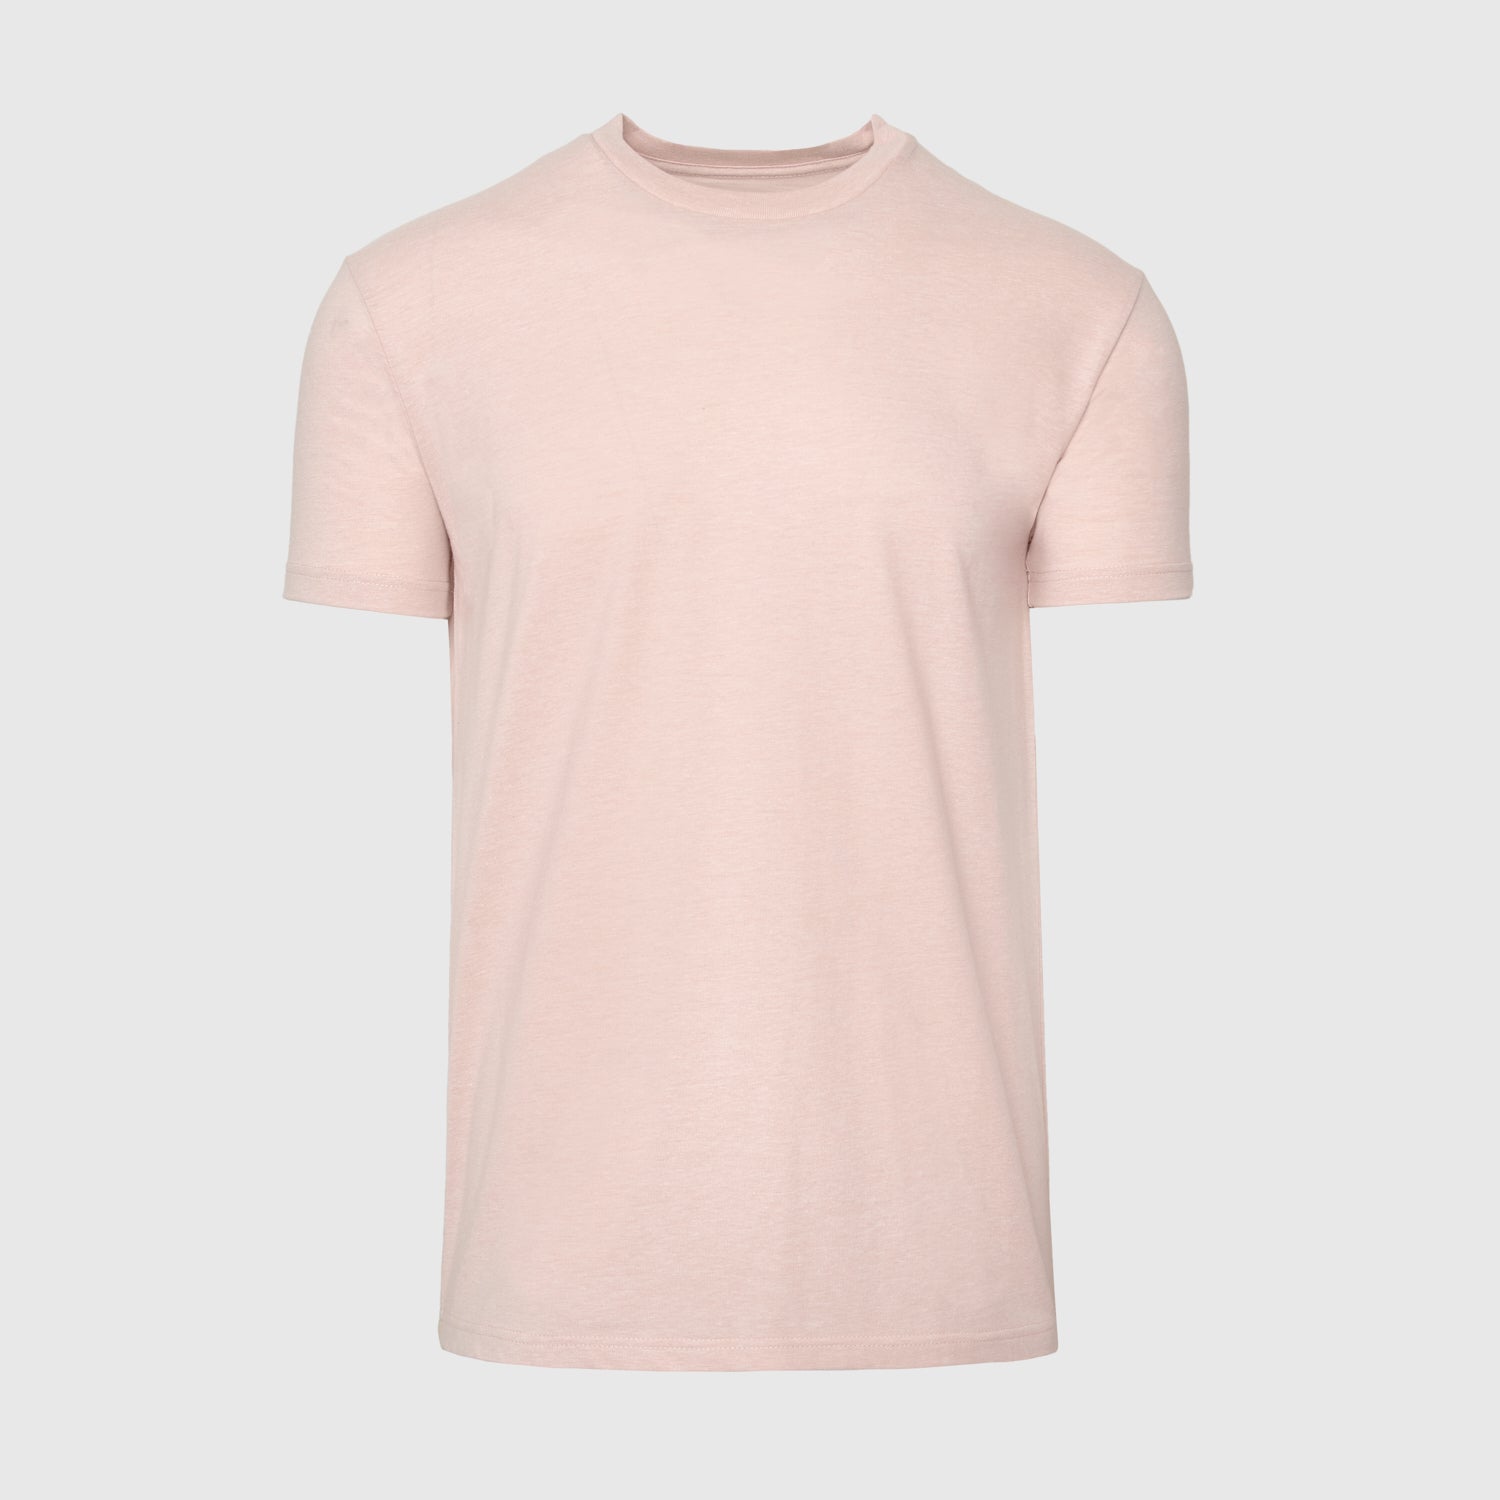 True Classic Heather Dusty Pink Crew Neck T-Shirt | Cotton Blend | Athletic Cut | 2XL / 2XL